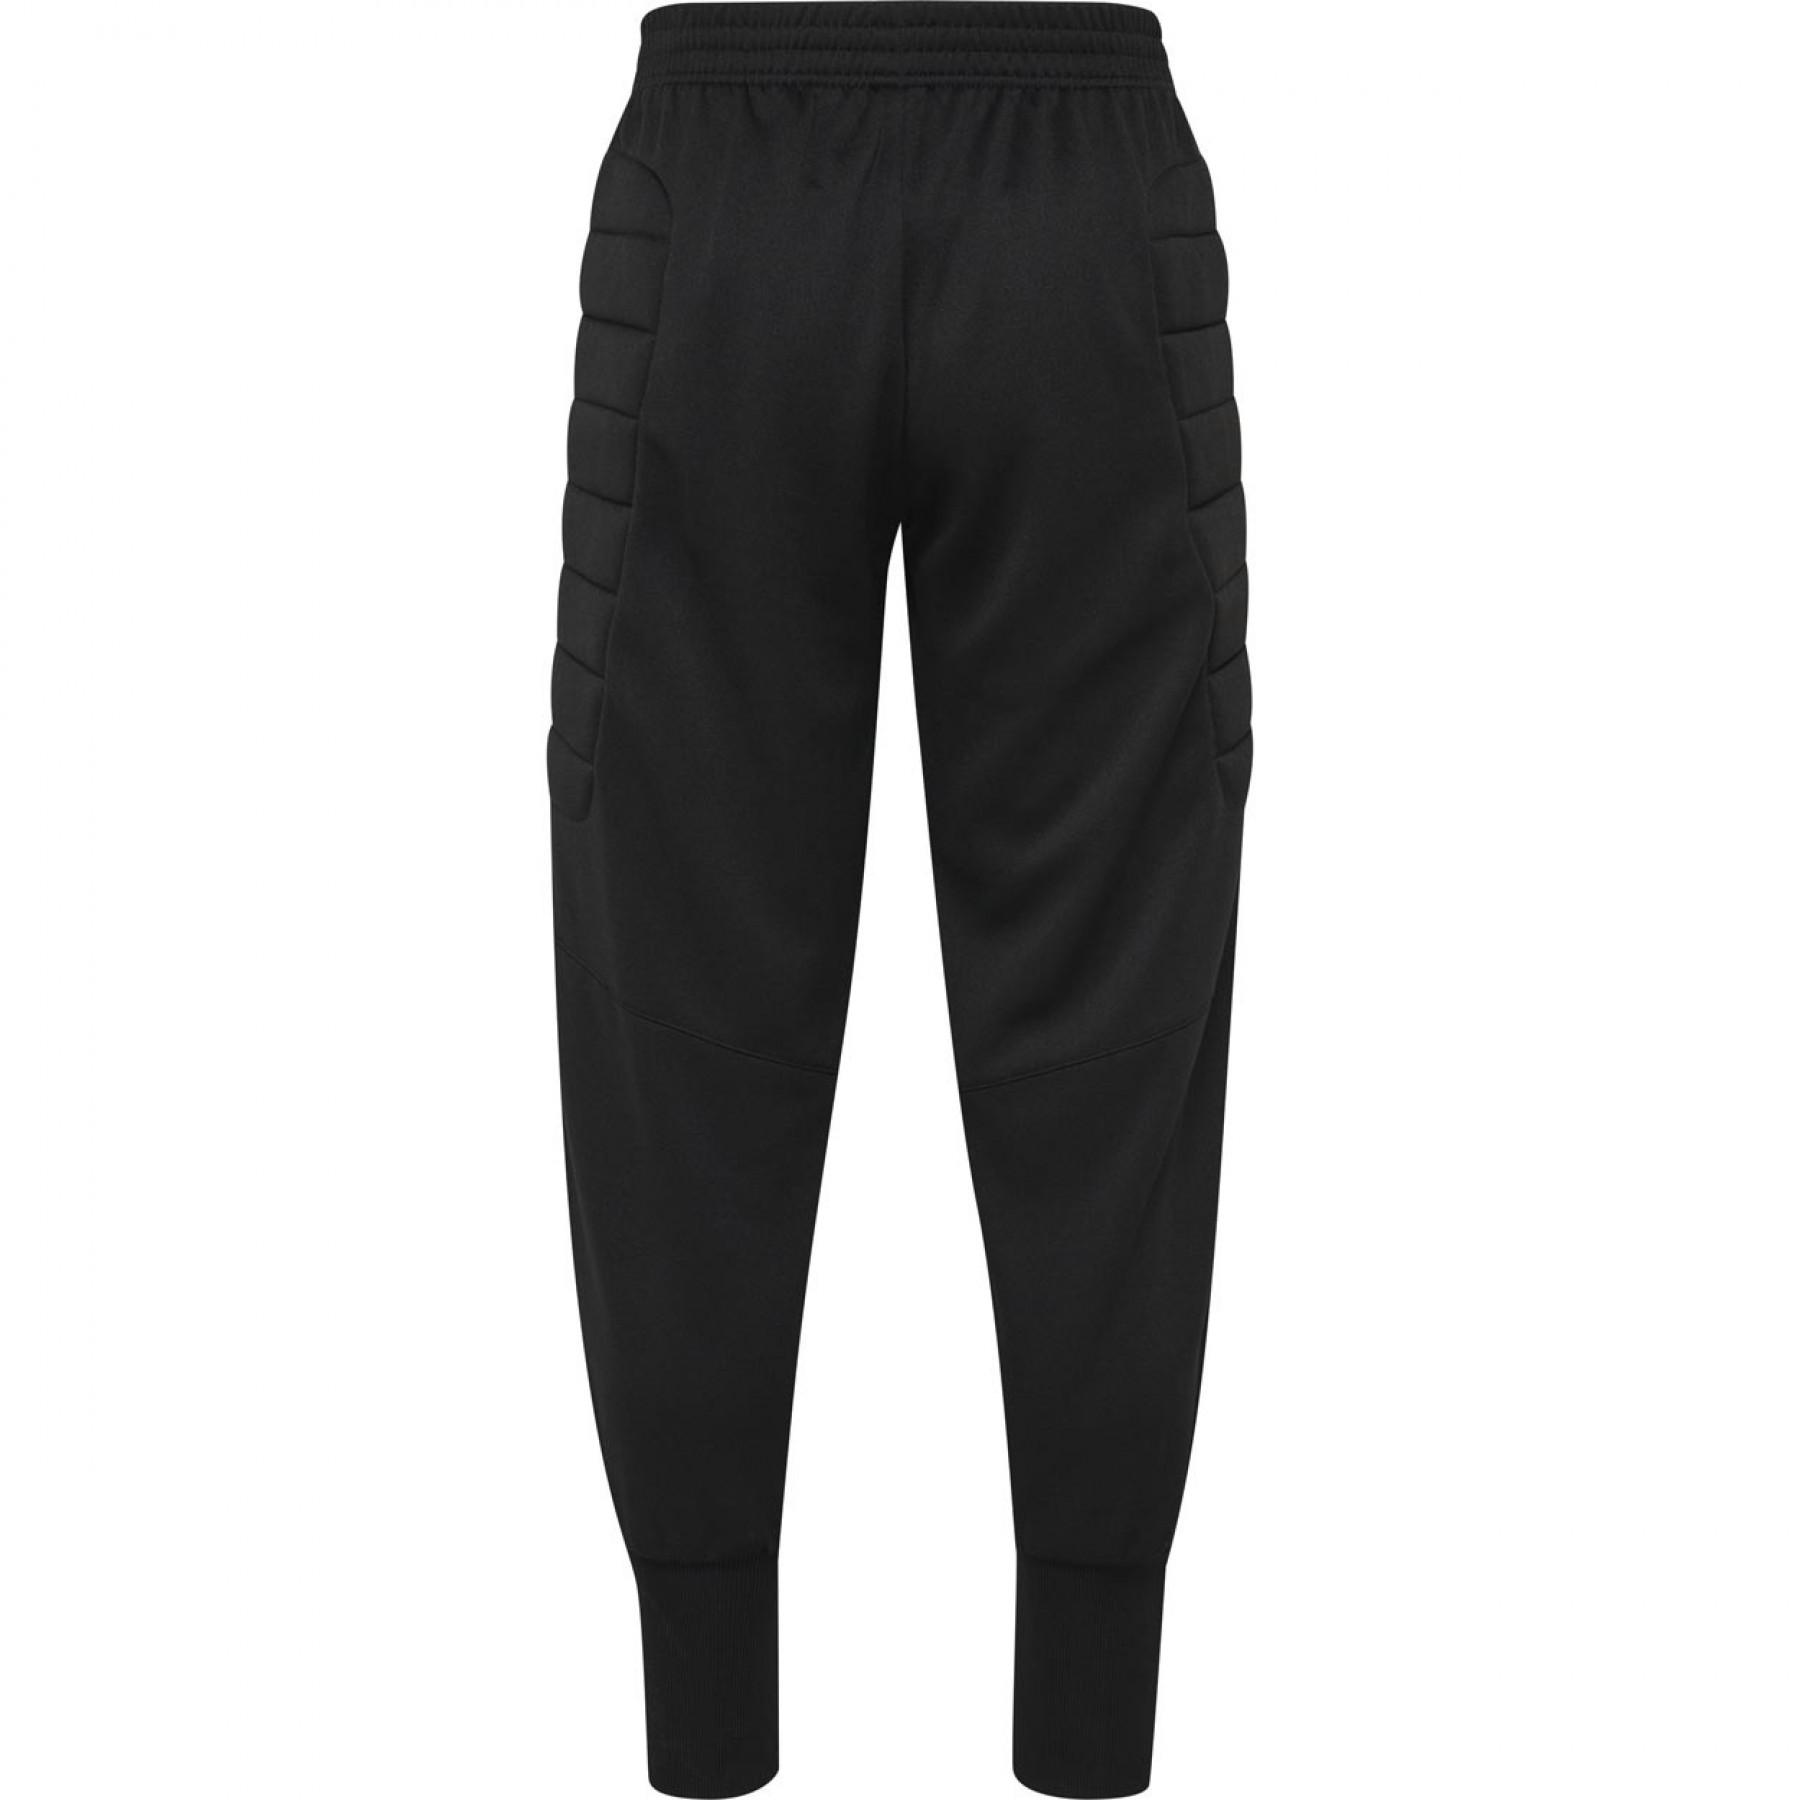 Joma Protec Padded Goalkeeper Pants - Premier Teamwear